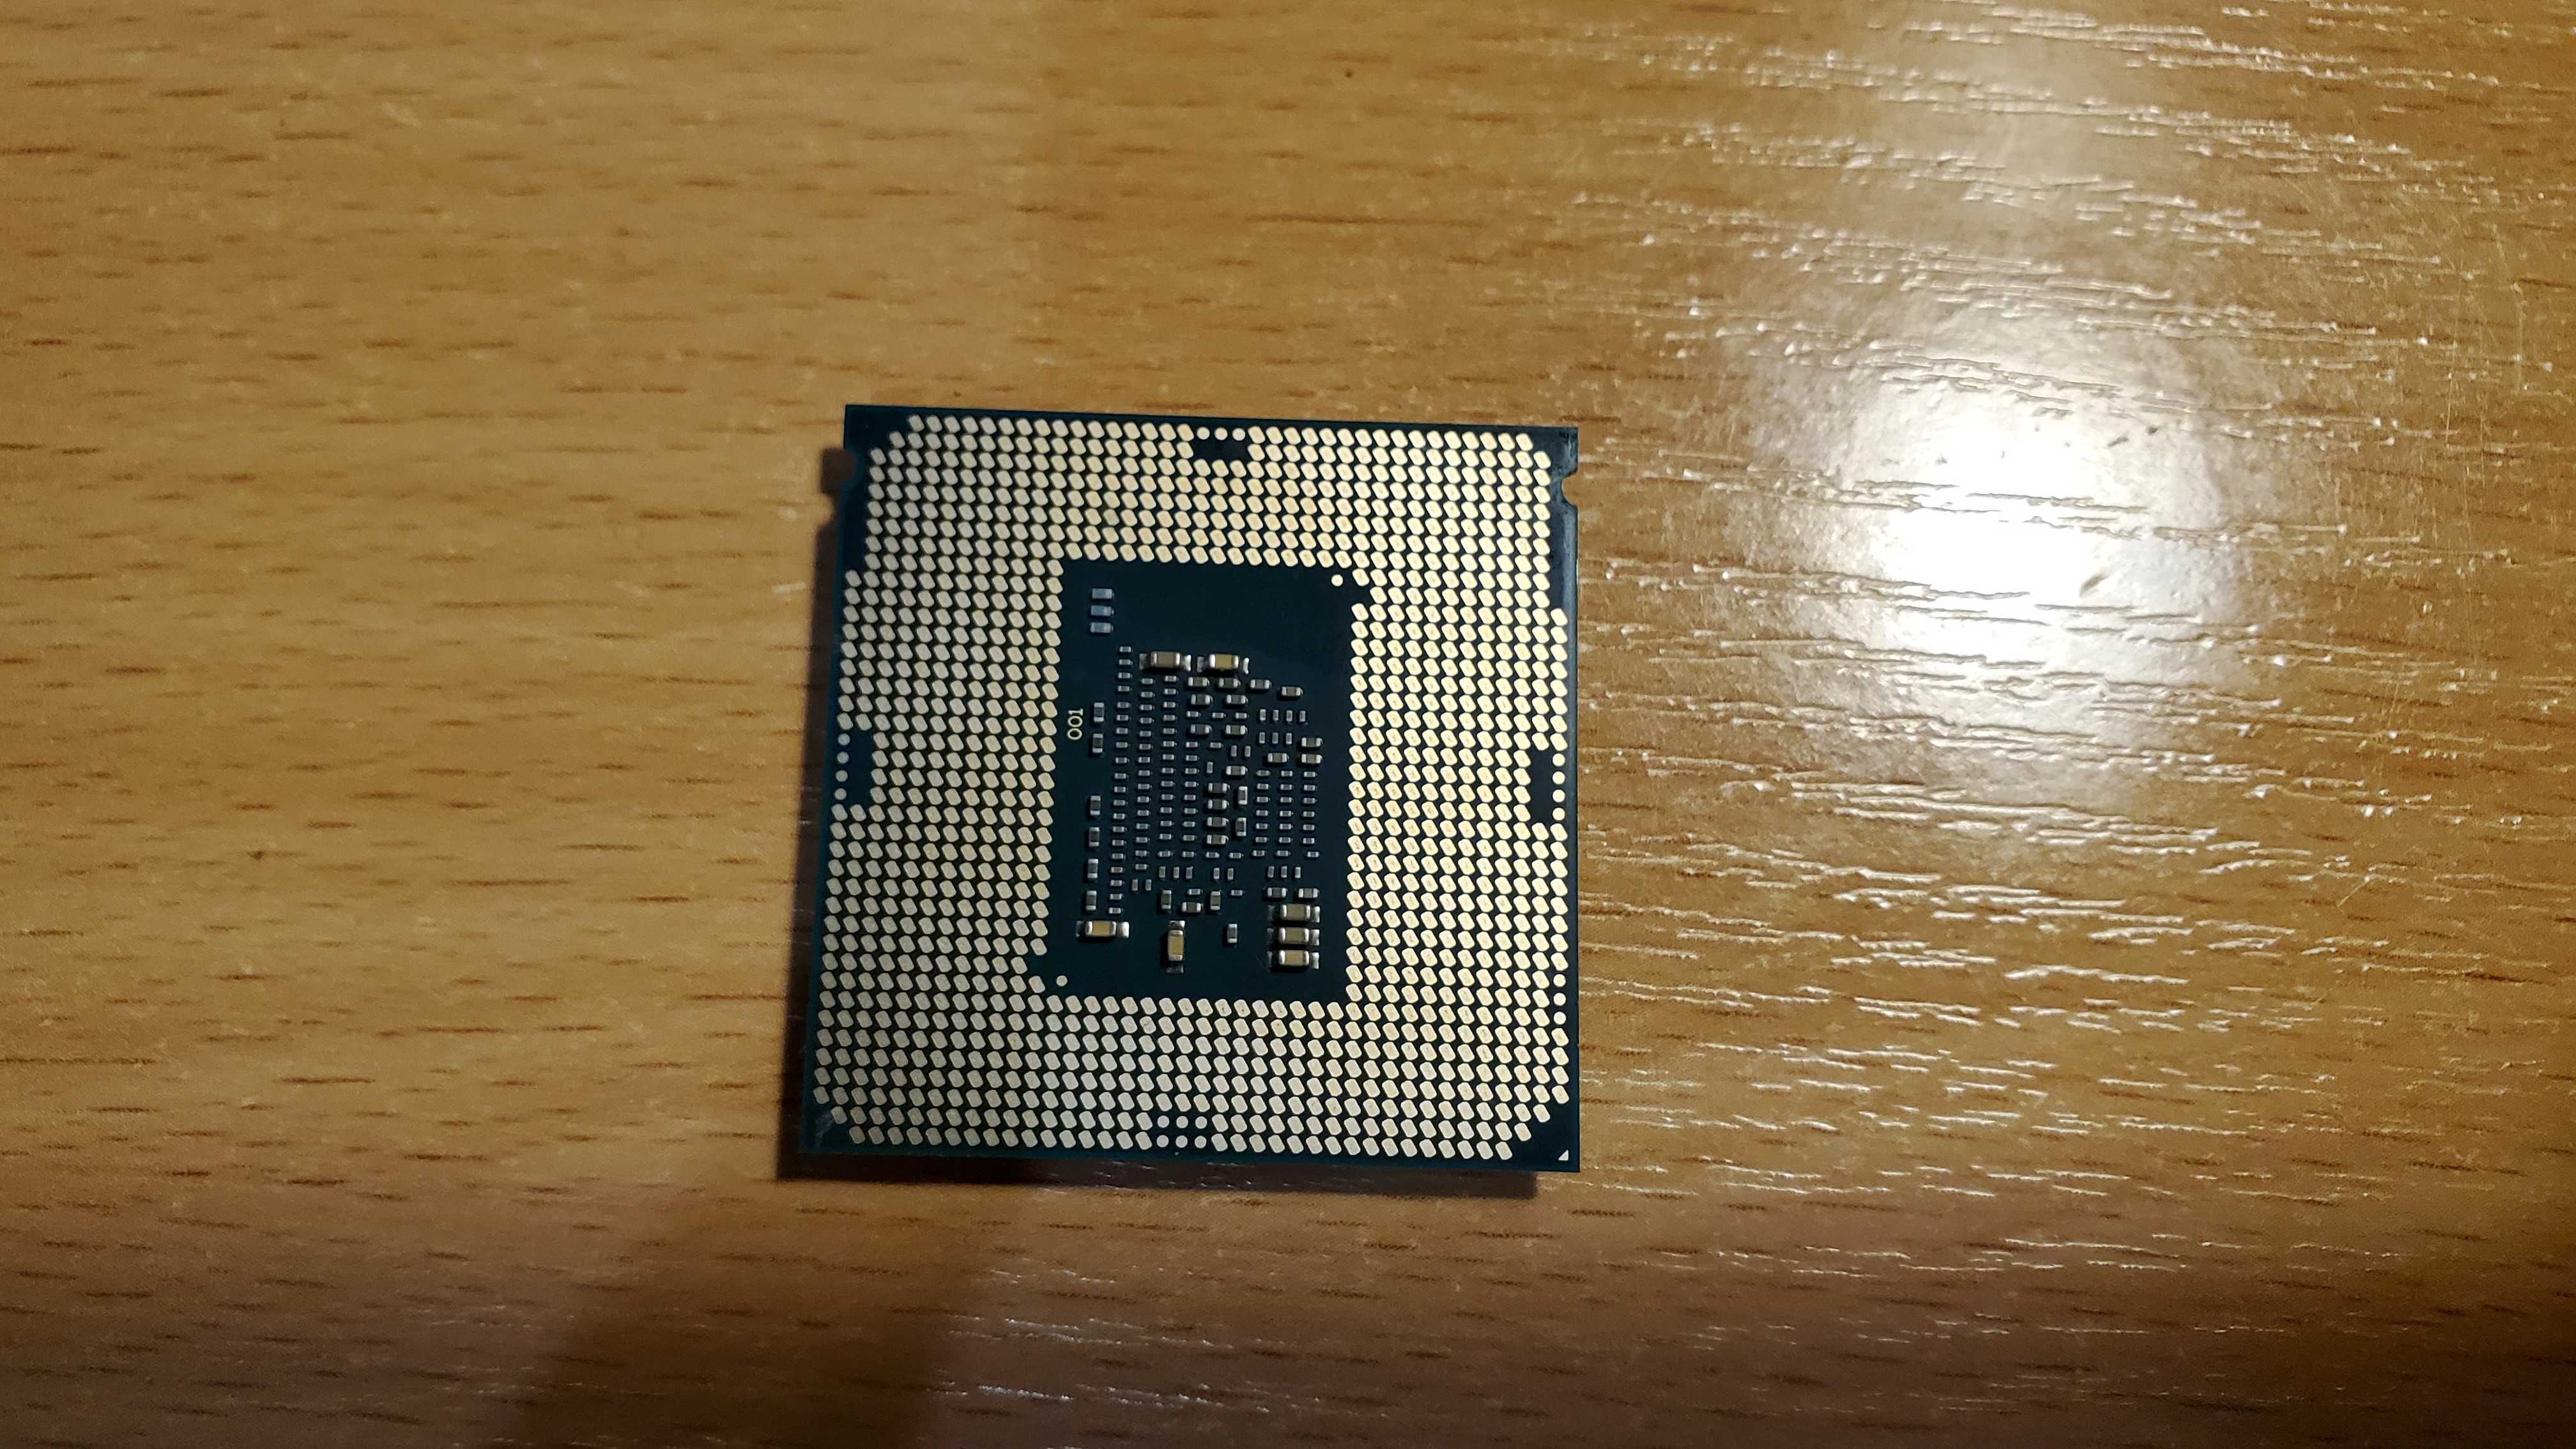 Процессор Intel Celeron G3900, socket 1151 + кулер